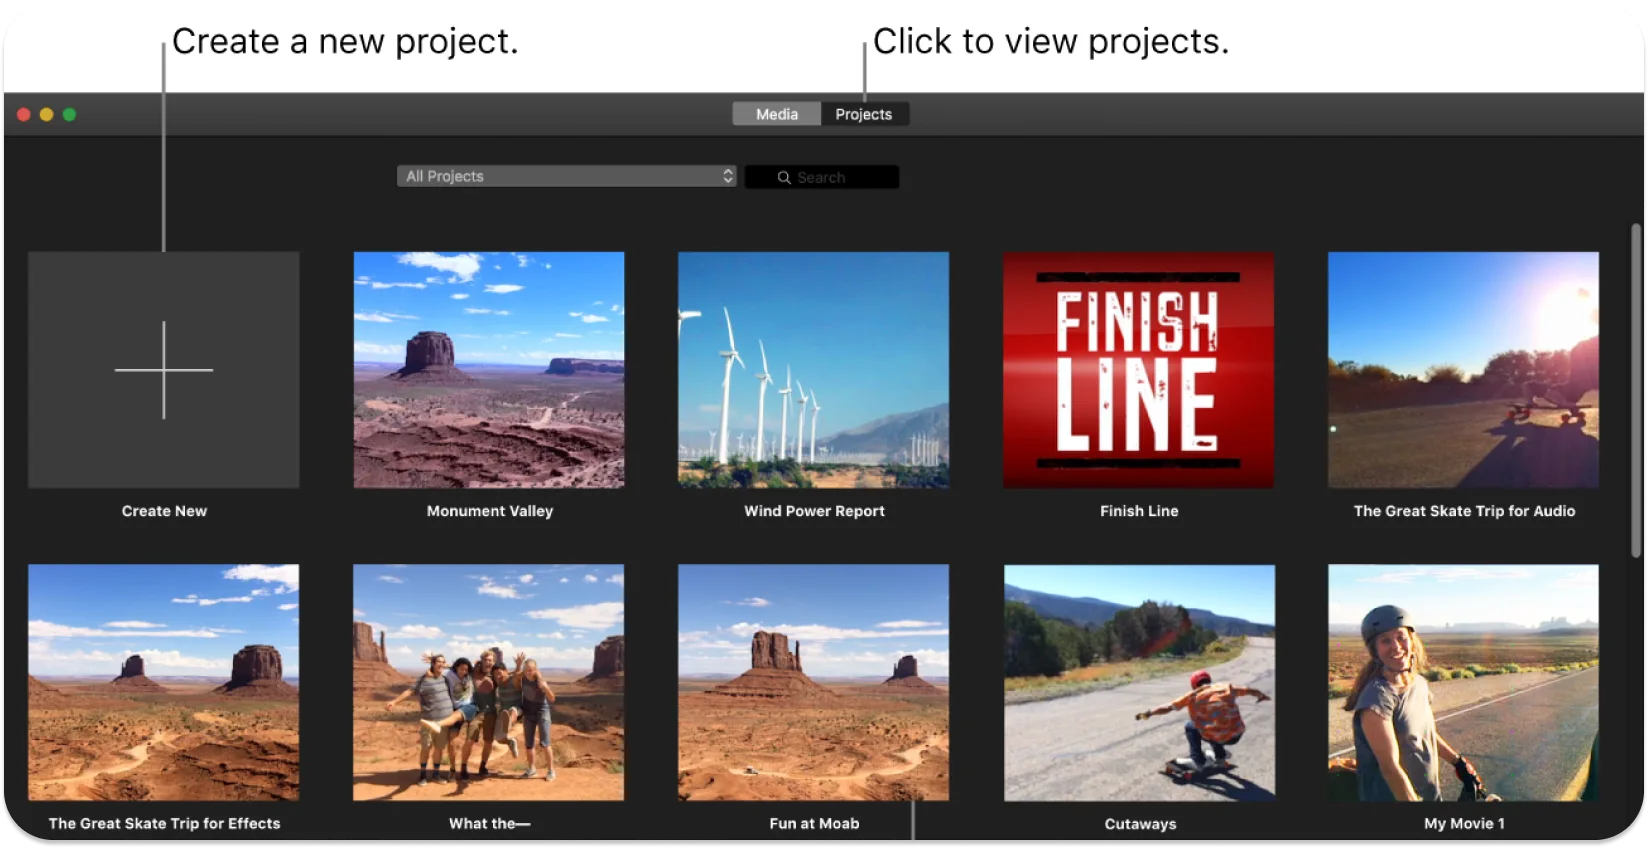 iMovie 界面显示一系列视频项目缩略图，并提示创建新项目或打开现有项目。
